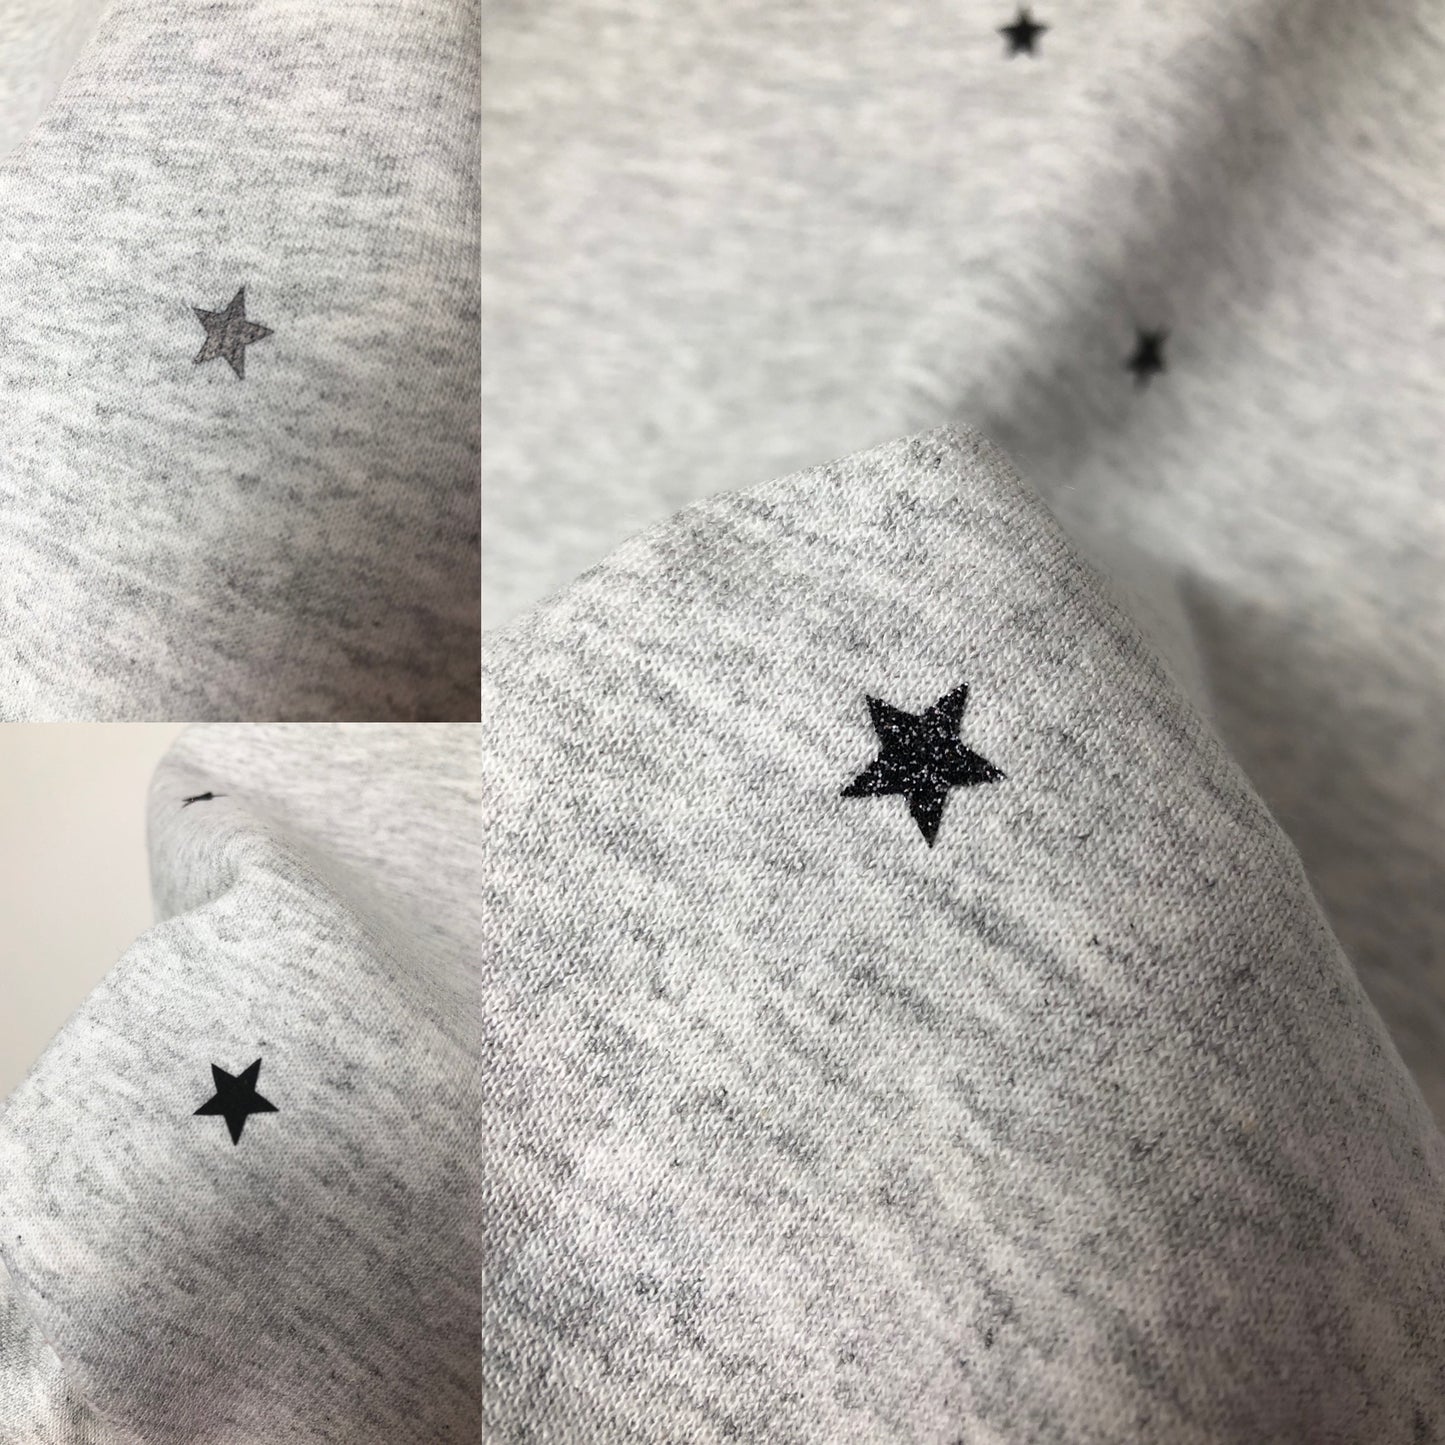 Miniature Star Sweatshirt - unisex